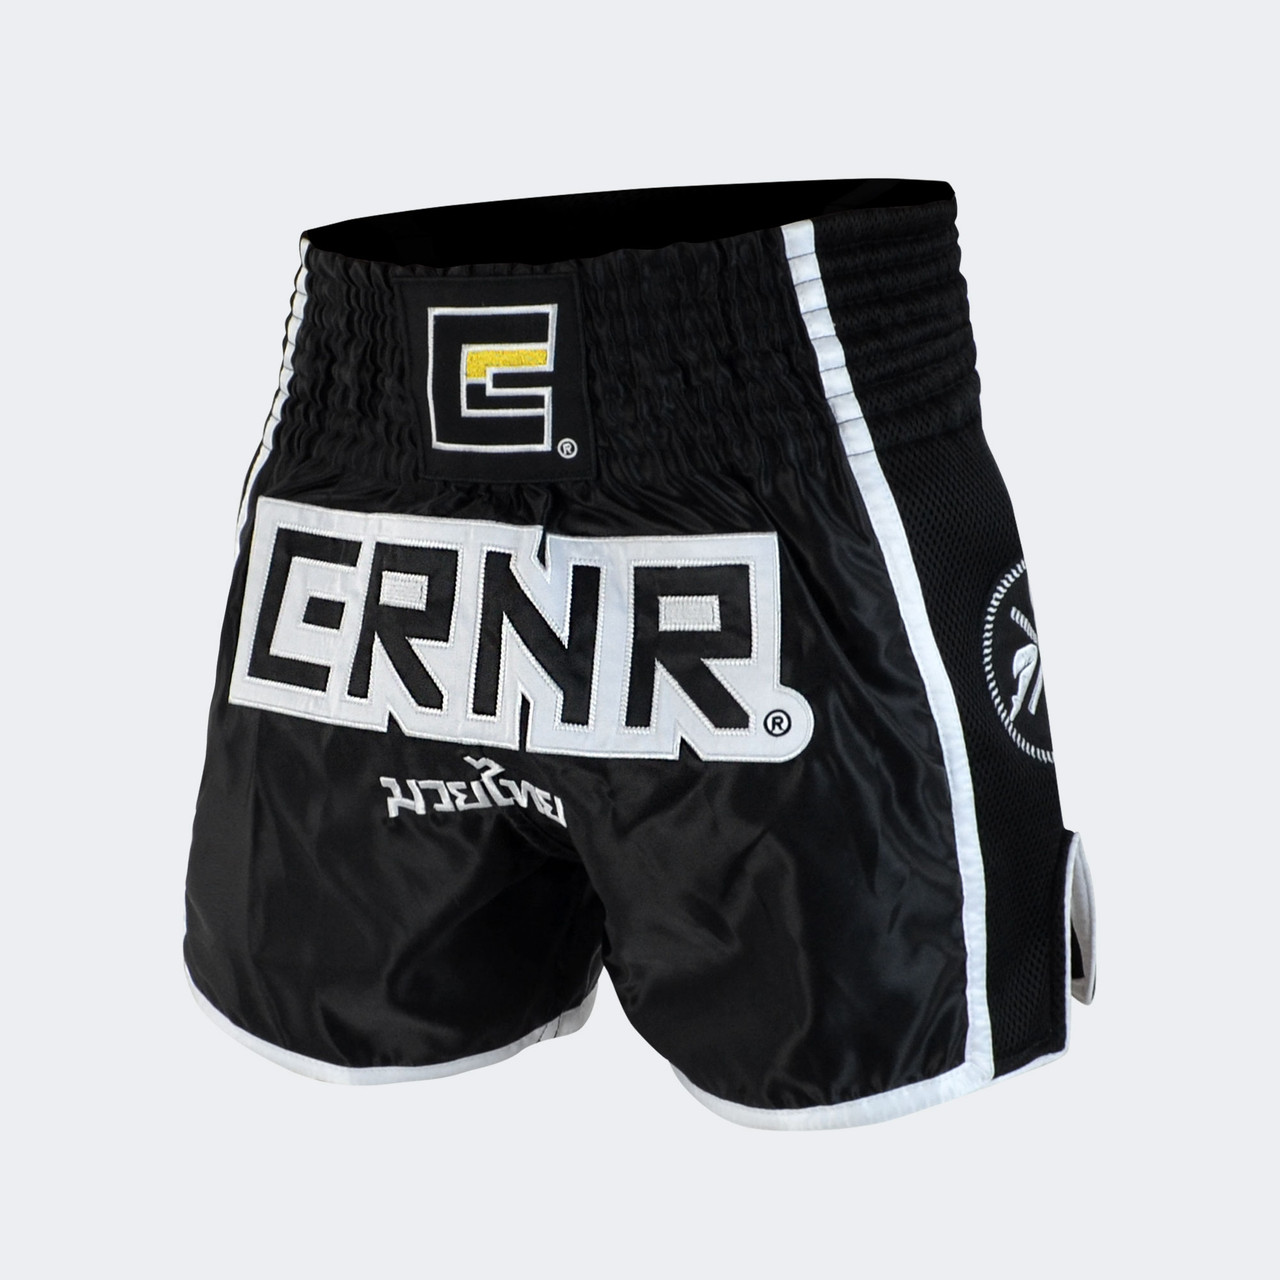 CRNR Muay Thai Shorts | Black/White | Combat Corner